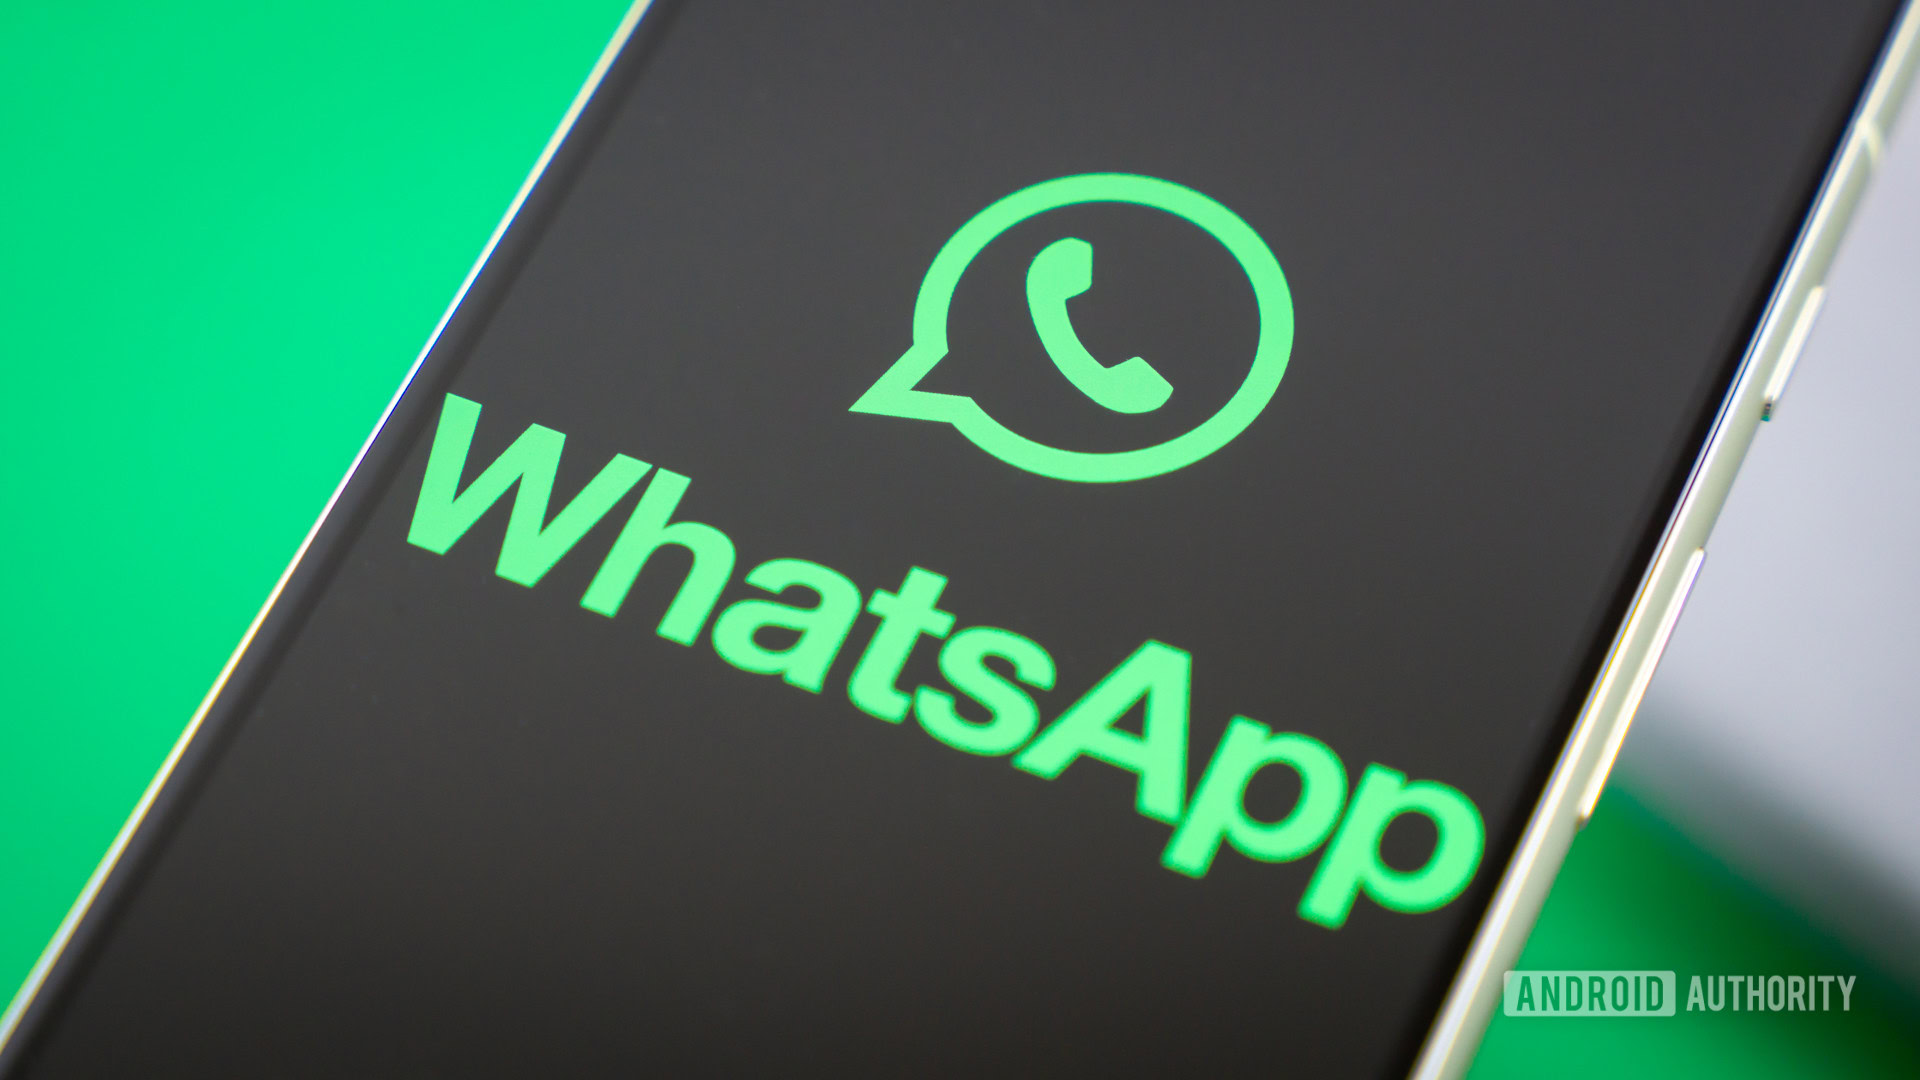 WhatsApp logo on smartphone next to everyday accessories Stock photo 4